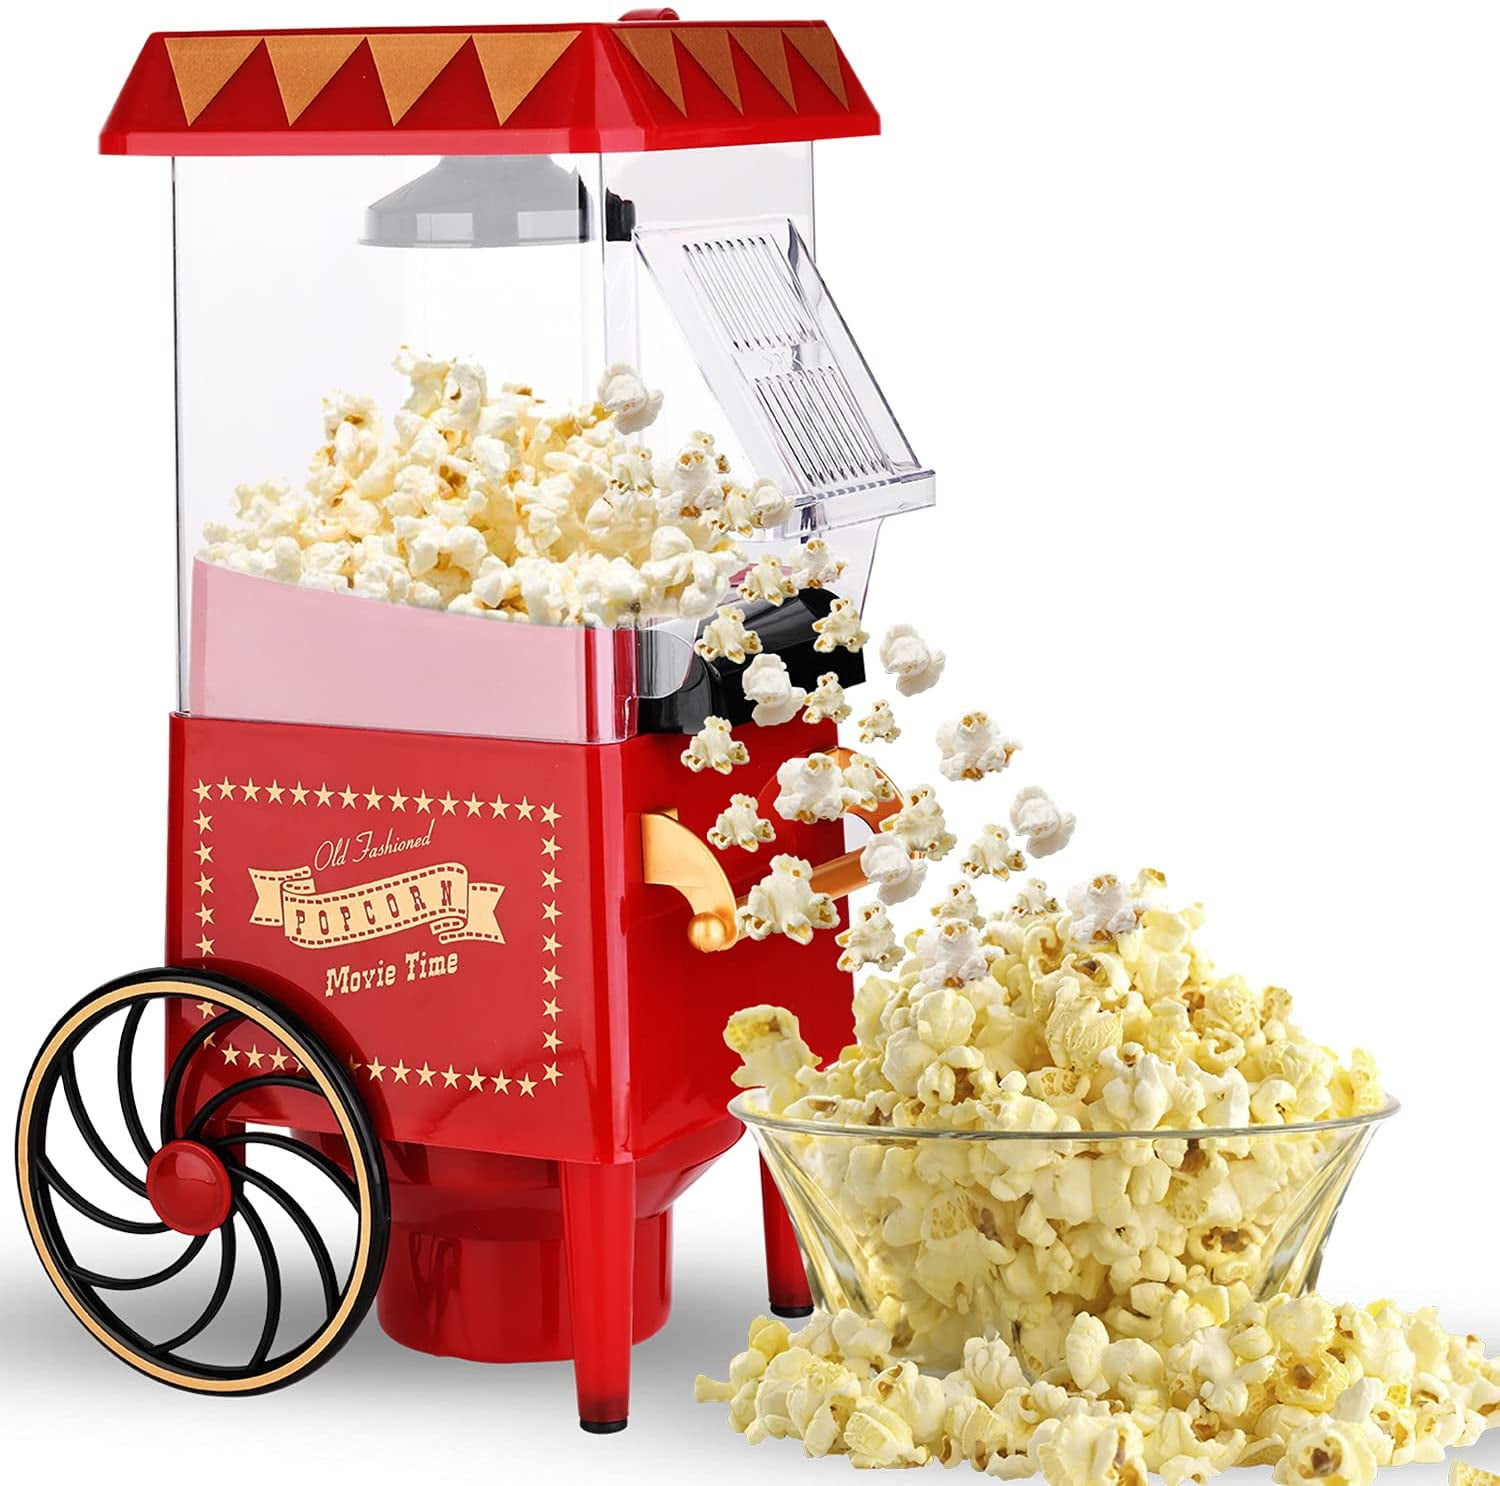 810047169420 Popcorn Machine Hot Air Electric Popper Kernel Corn Maker Bpa  Free No Oil 5 Core POP Sea Green